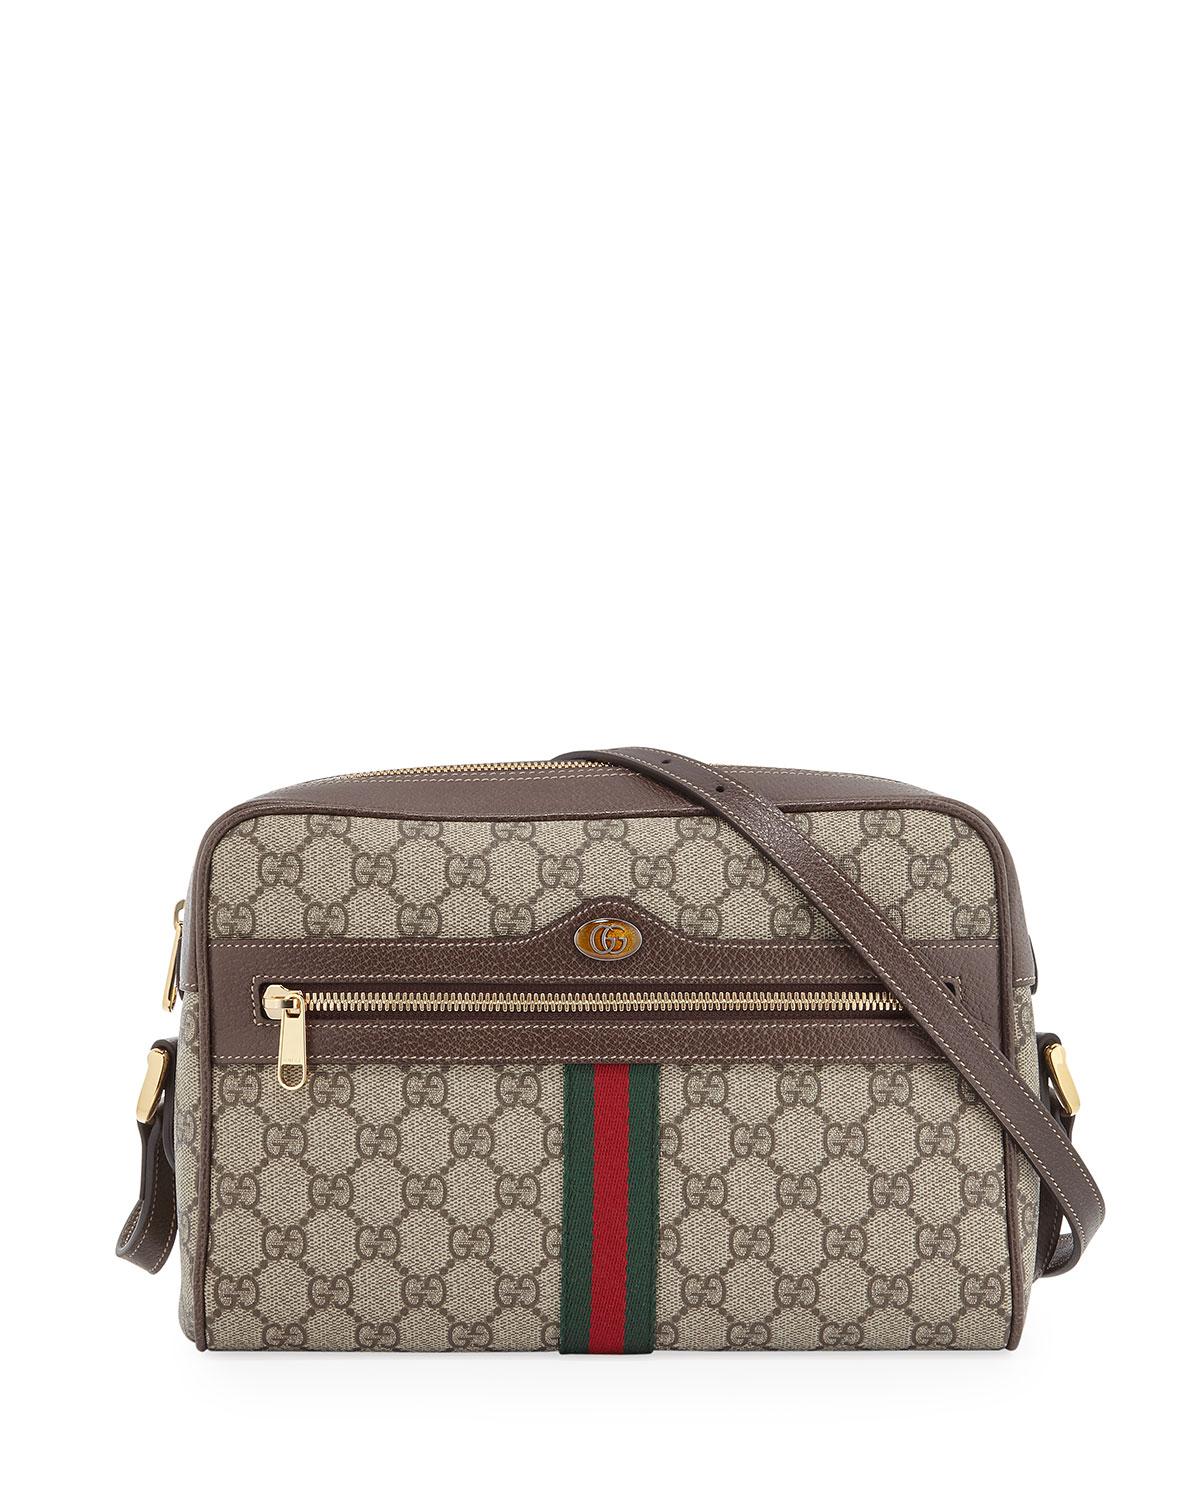  Gucci  Ophidia  Medium GG Supreme Camera Crossbody Bag  in 